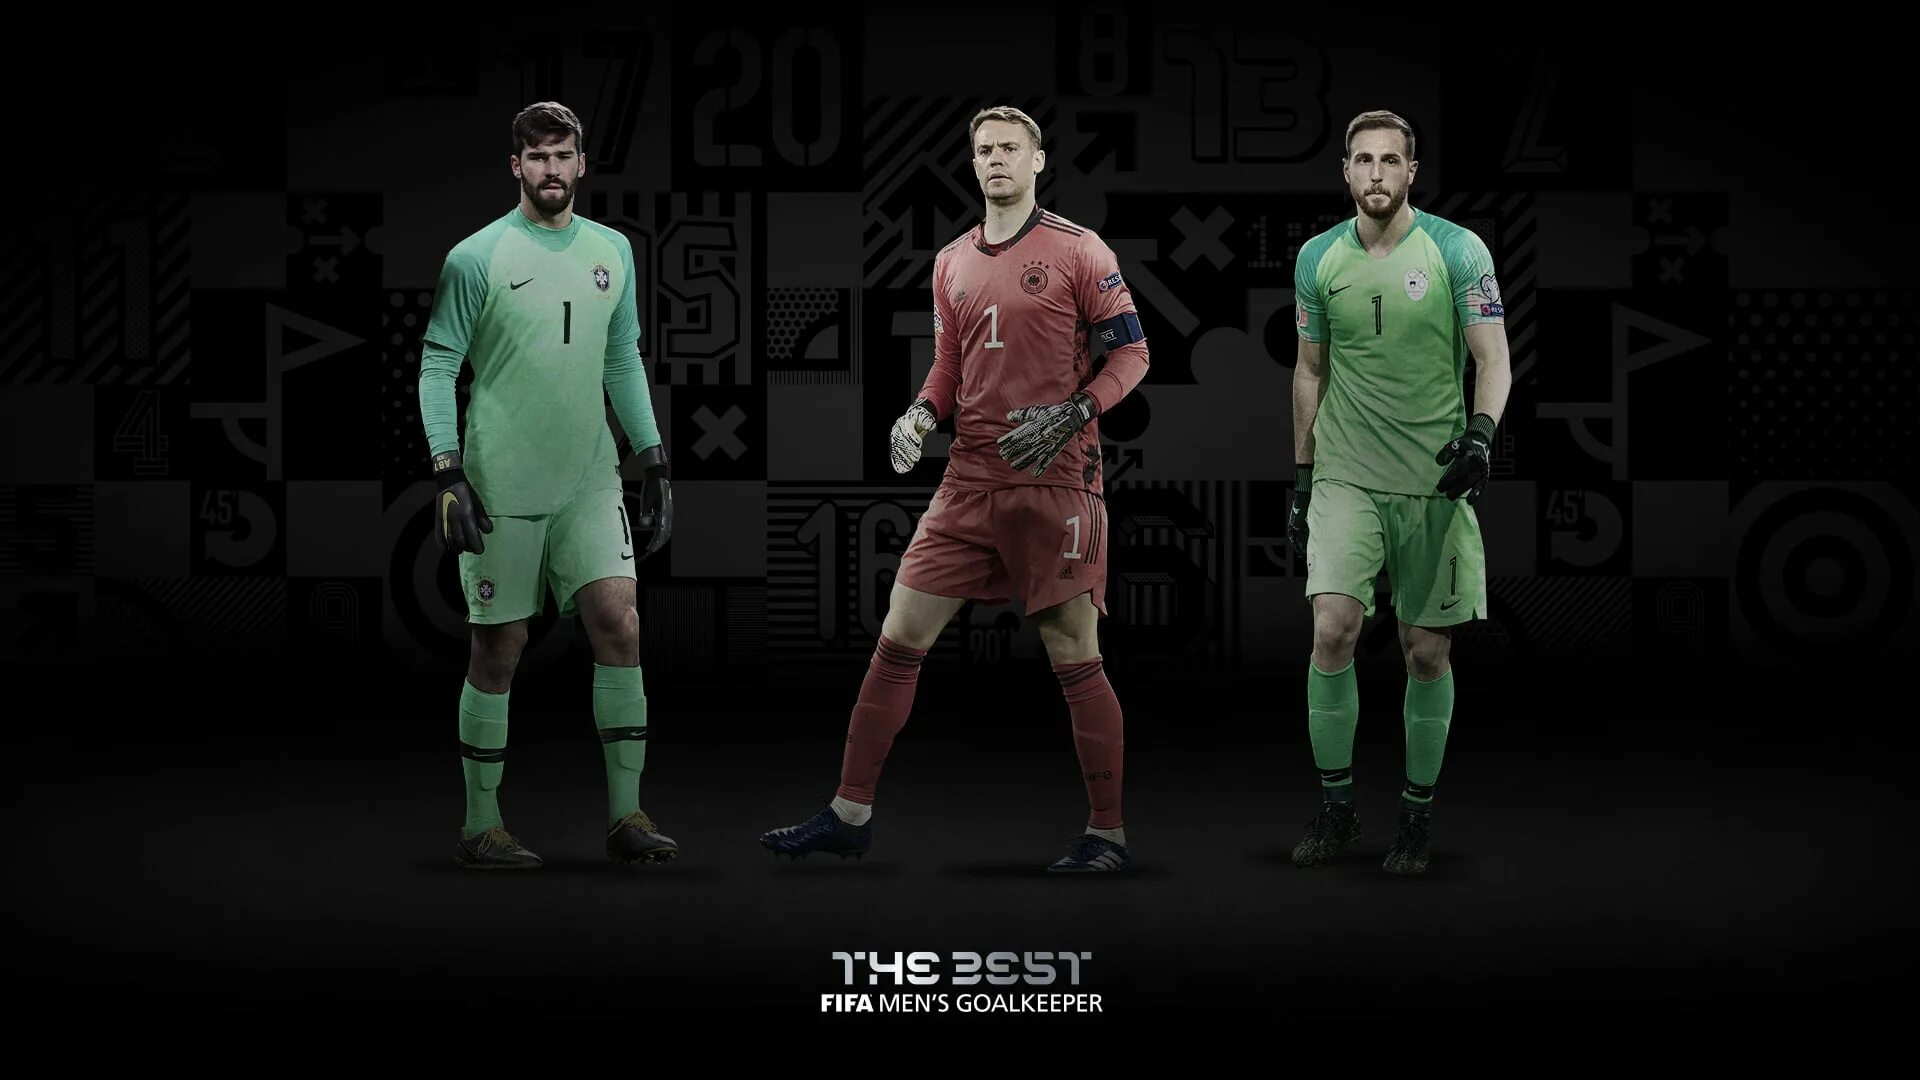 Fifa вратарь. Лучшие вратари ФИФА 2020. The best FIFA goalkeeper. The best награда ФИФА. The best FIFA претенденты.